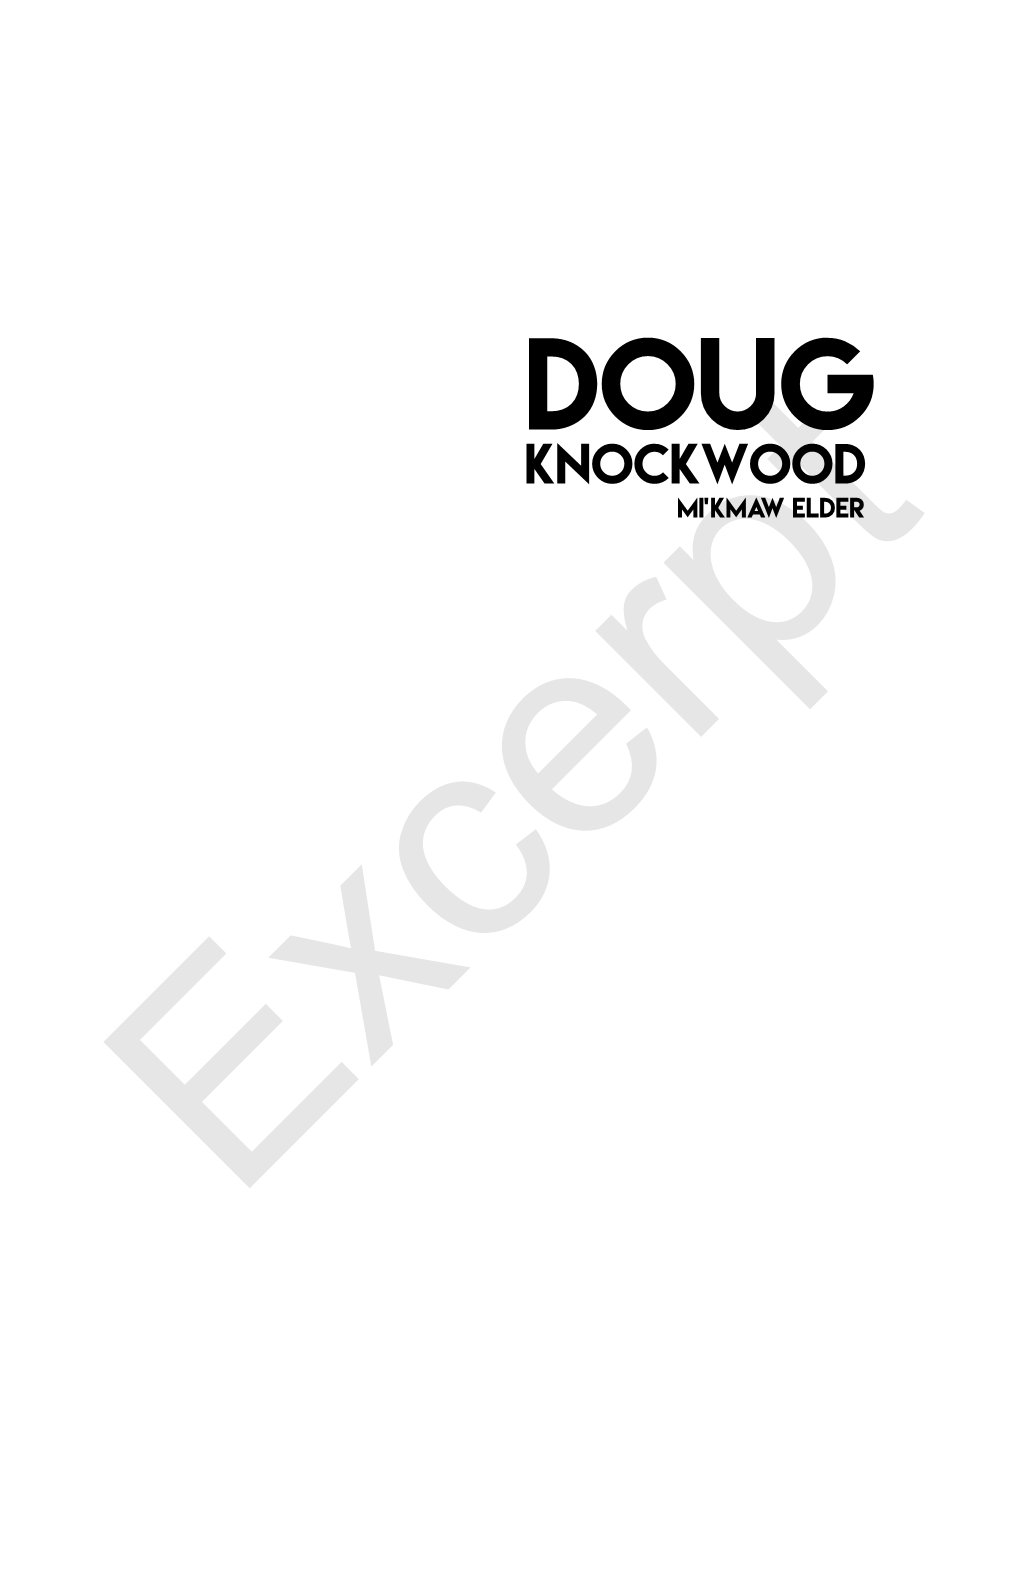 DOUG Knockwood Mi’Kmaw Elder